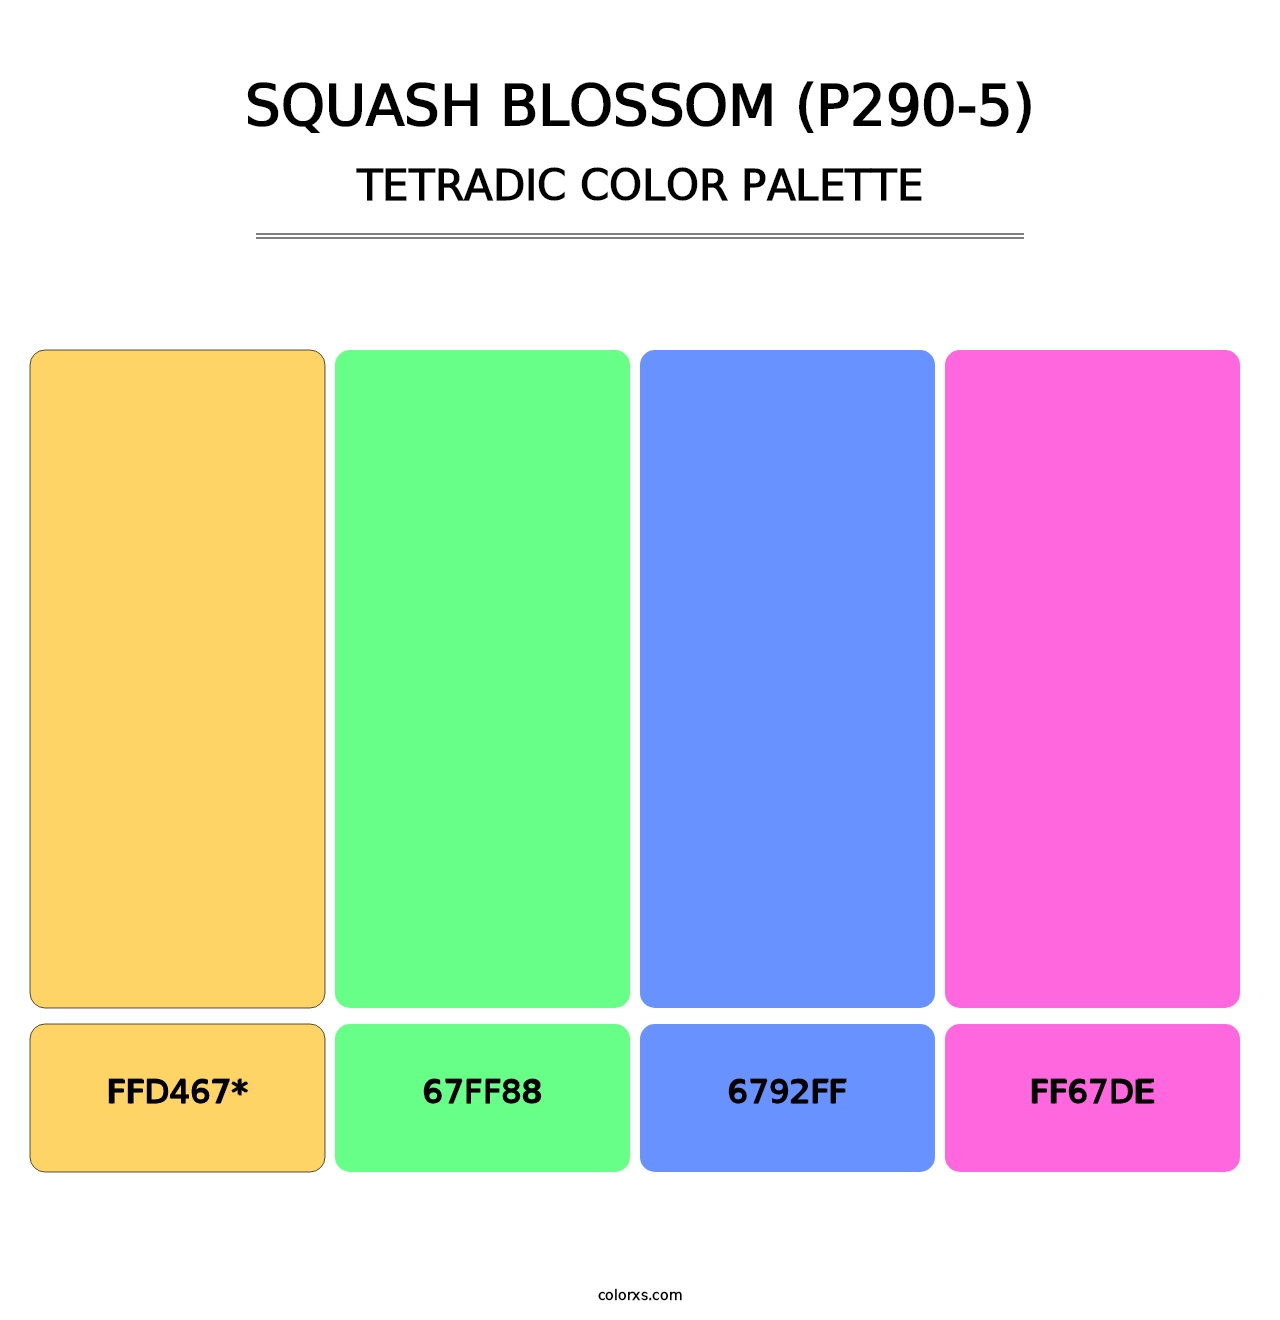 Squash Blossom (P290-5) - Tetradic Color Palette